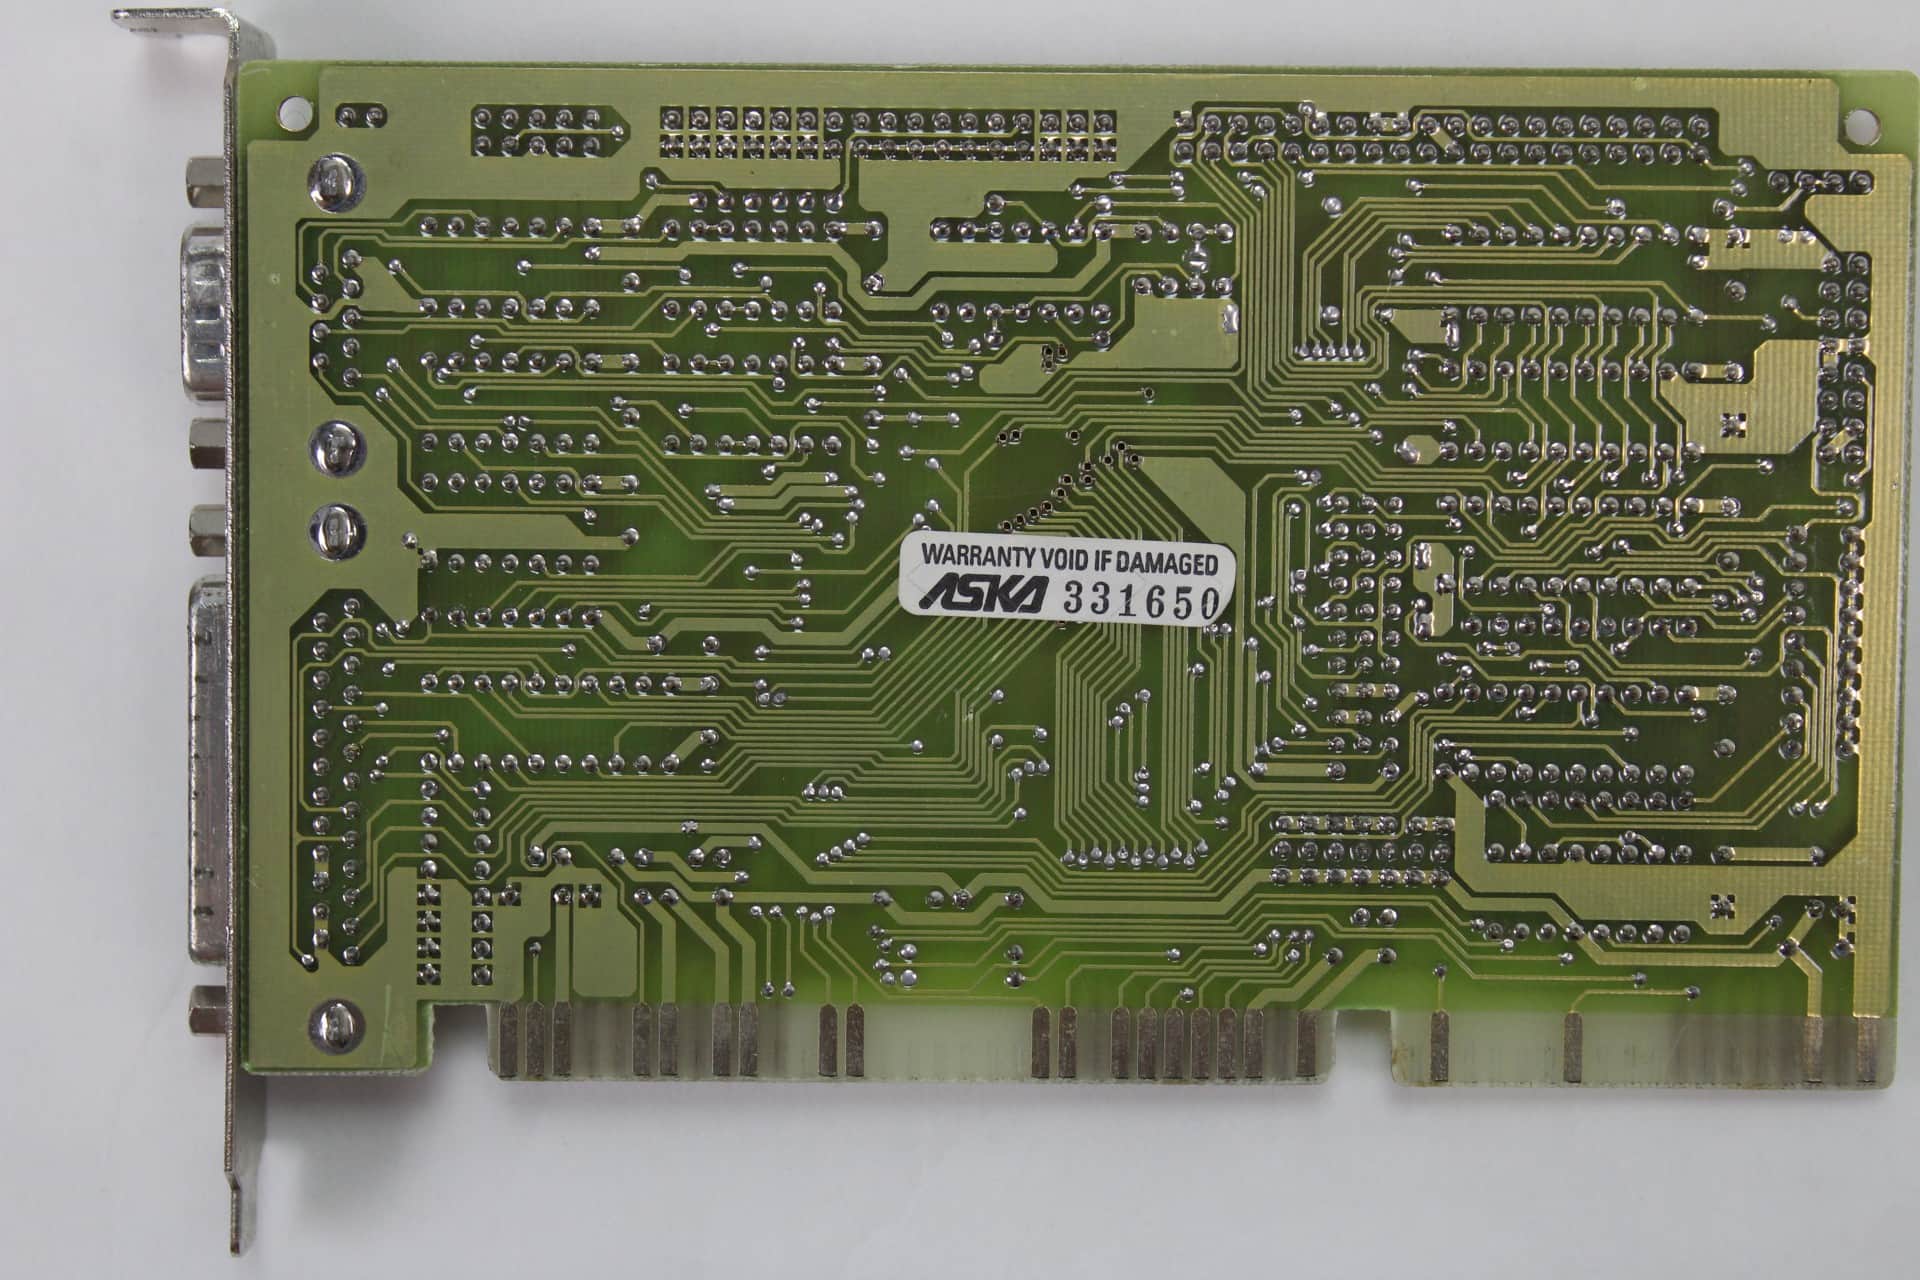 Highscreen Kompakt Serie-III 286 16MHz - FDD+IDE řadič